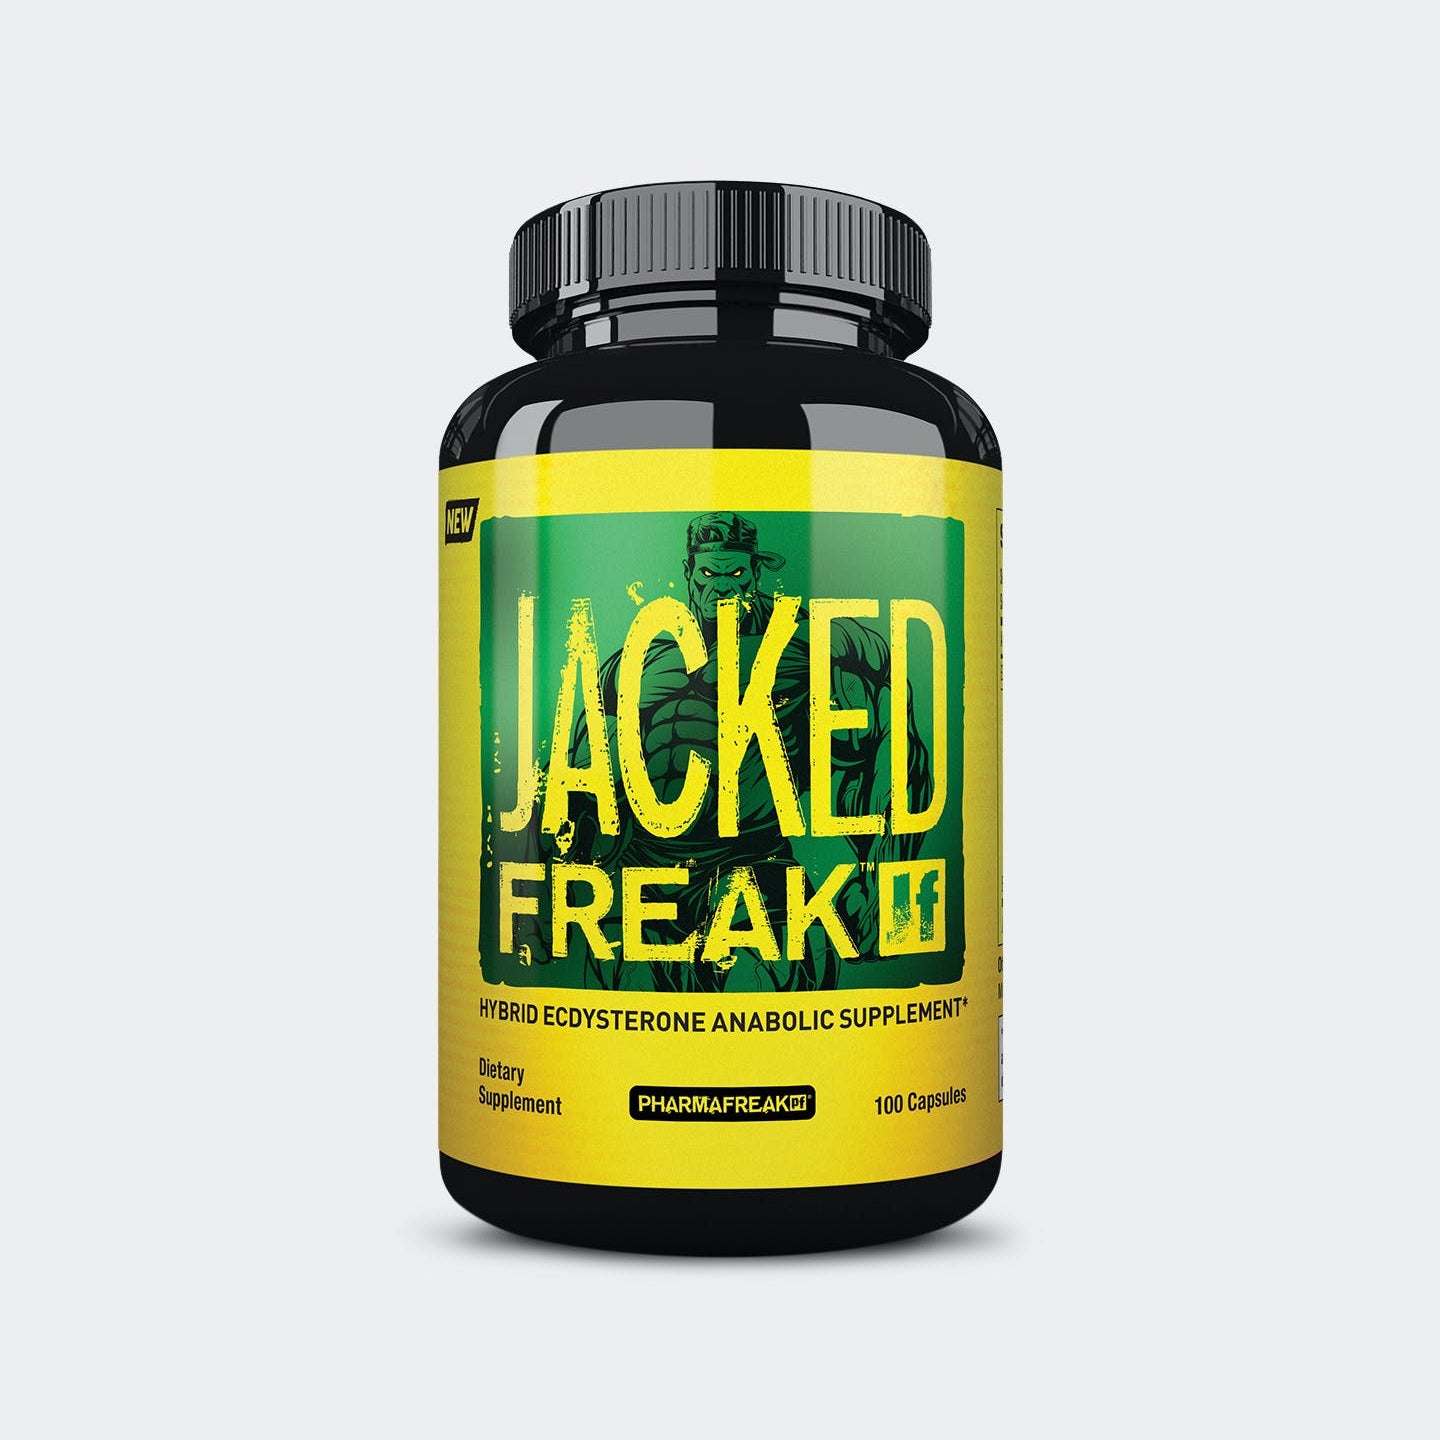 PharmaFreak Jacked Freak